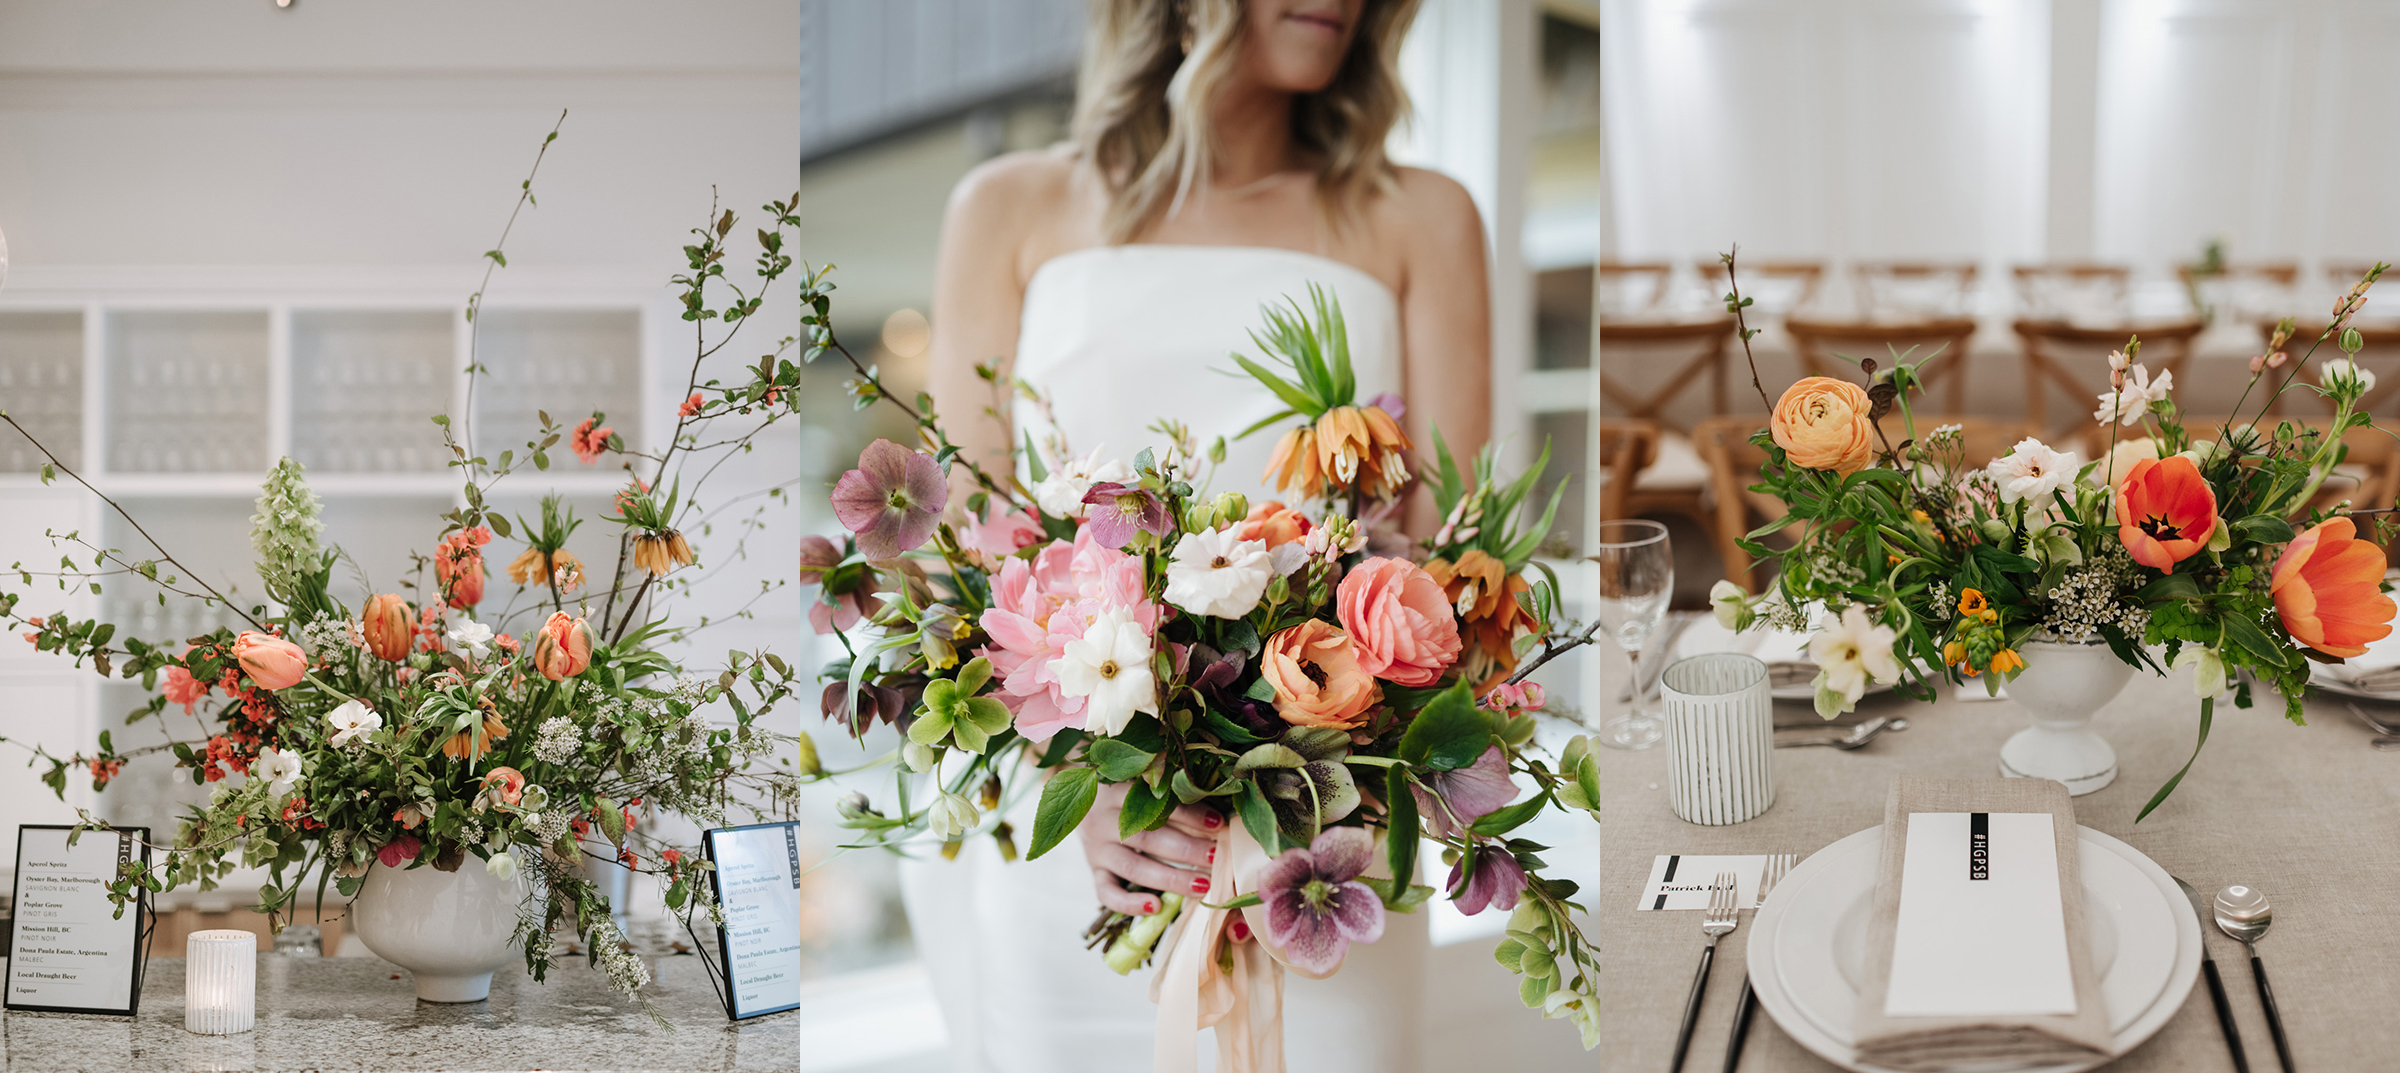 Vancouver Florist - Wedding Florist